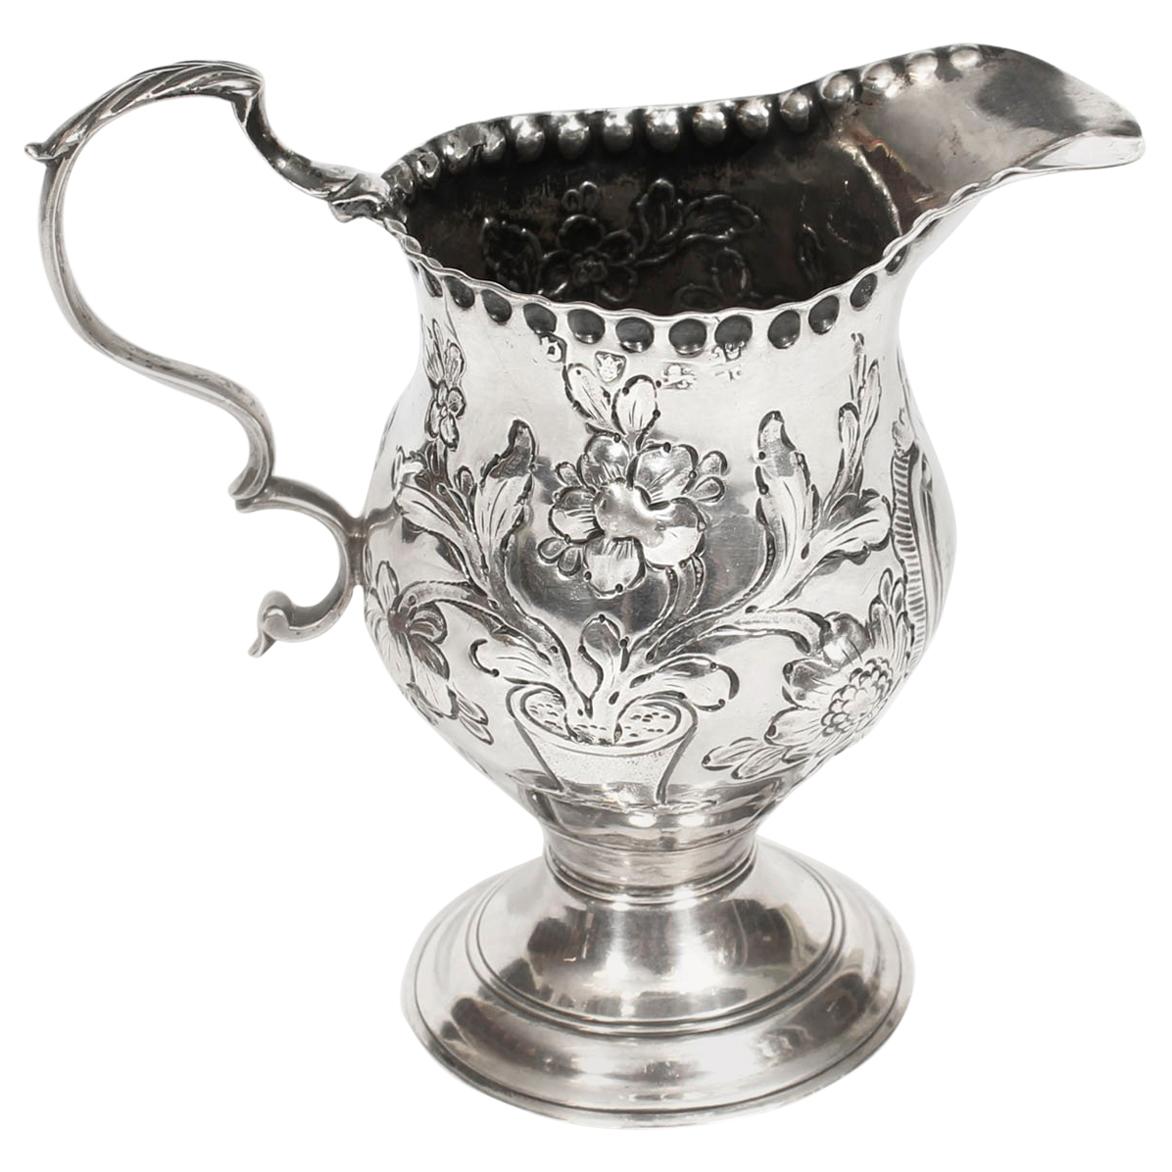 Antique English George III Sterling Silver Cream Jug 1770, 18th Century